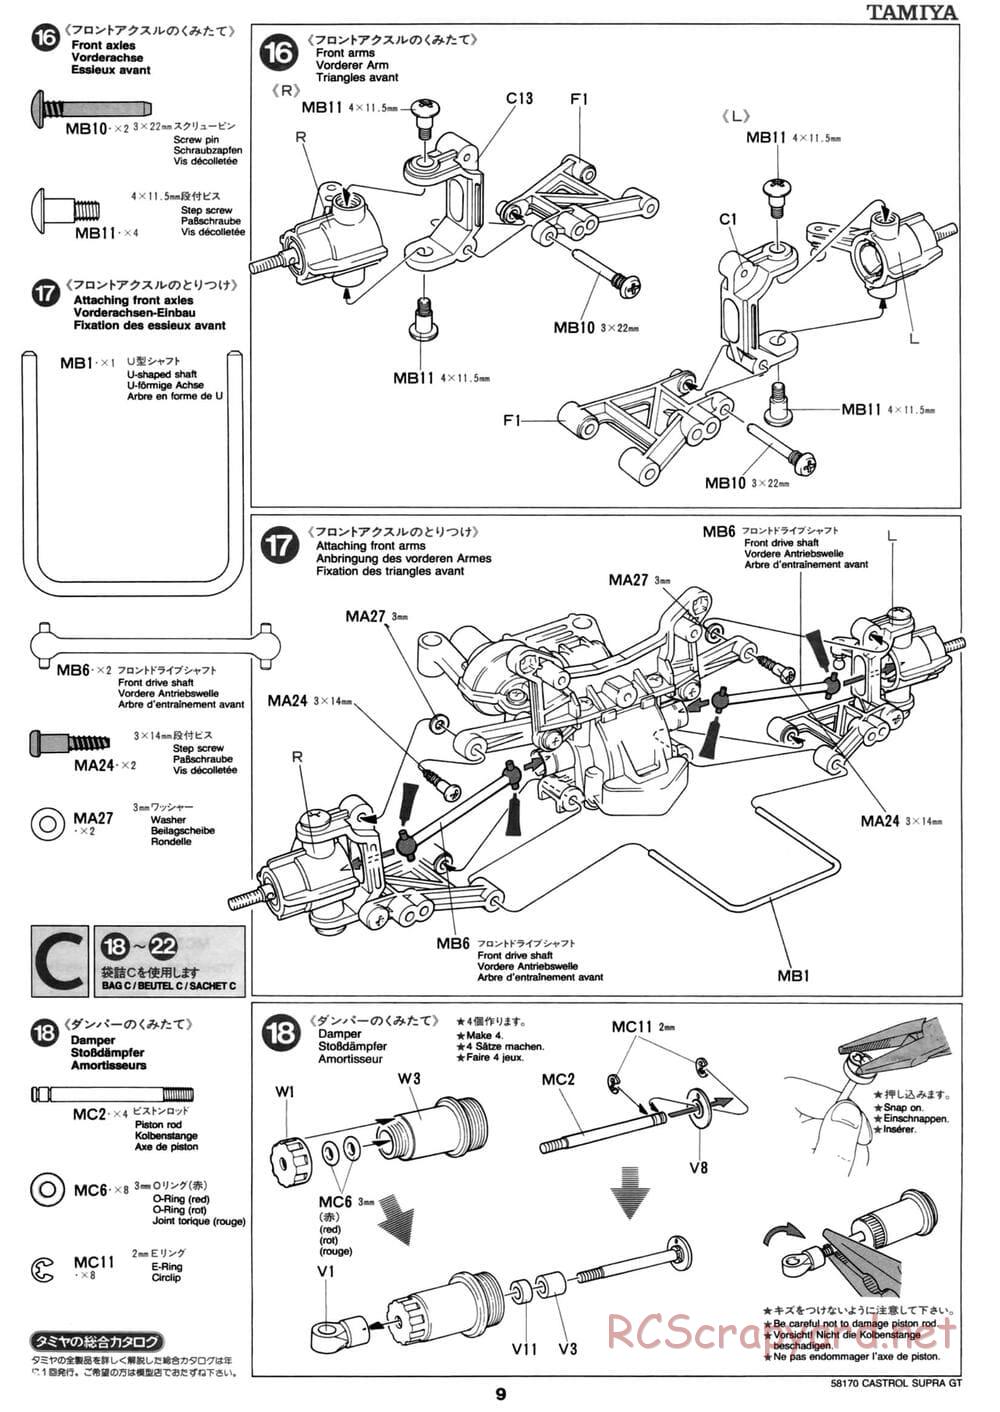 Tamiya - Castrol Toyota Tom's Supra GT - TA-02W Chassis - Manual - Page 9